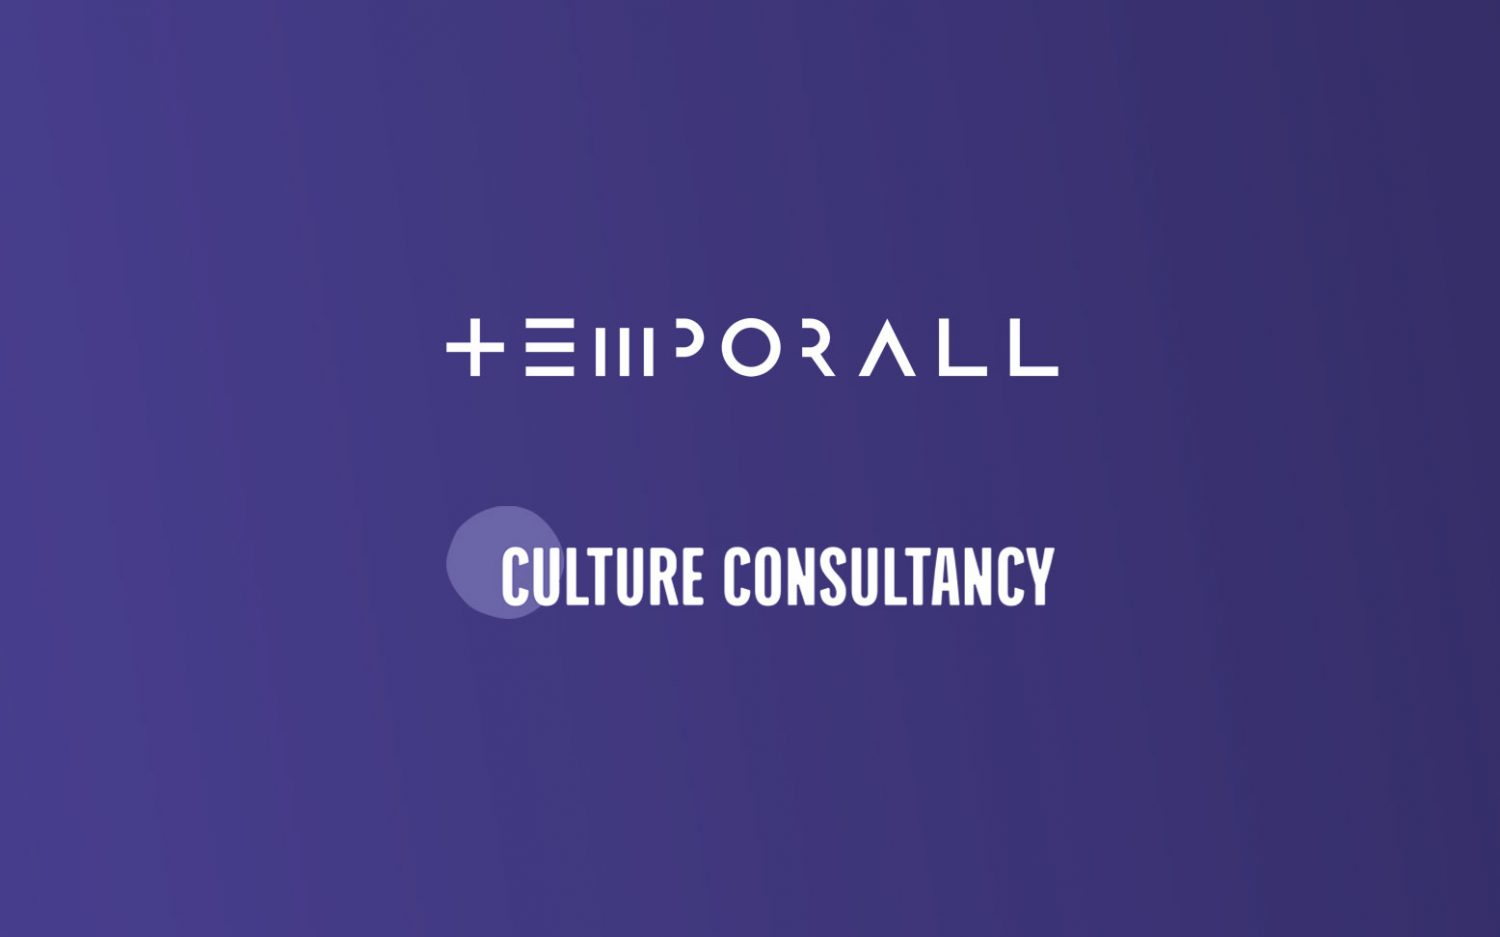 Culture Consultancy blogs